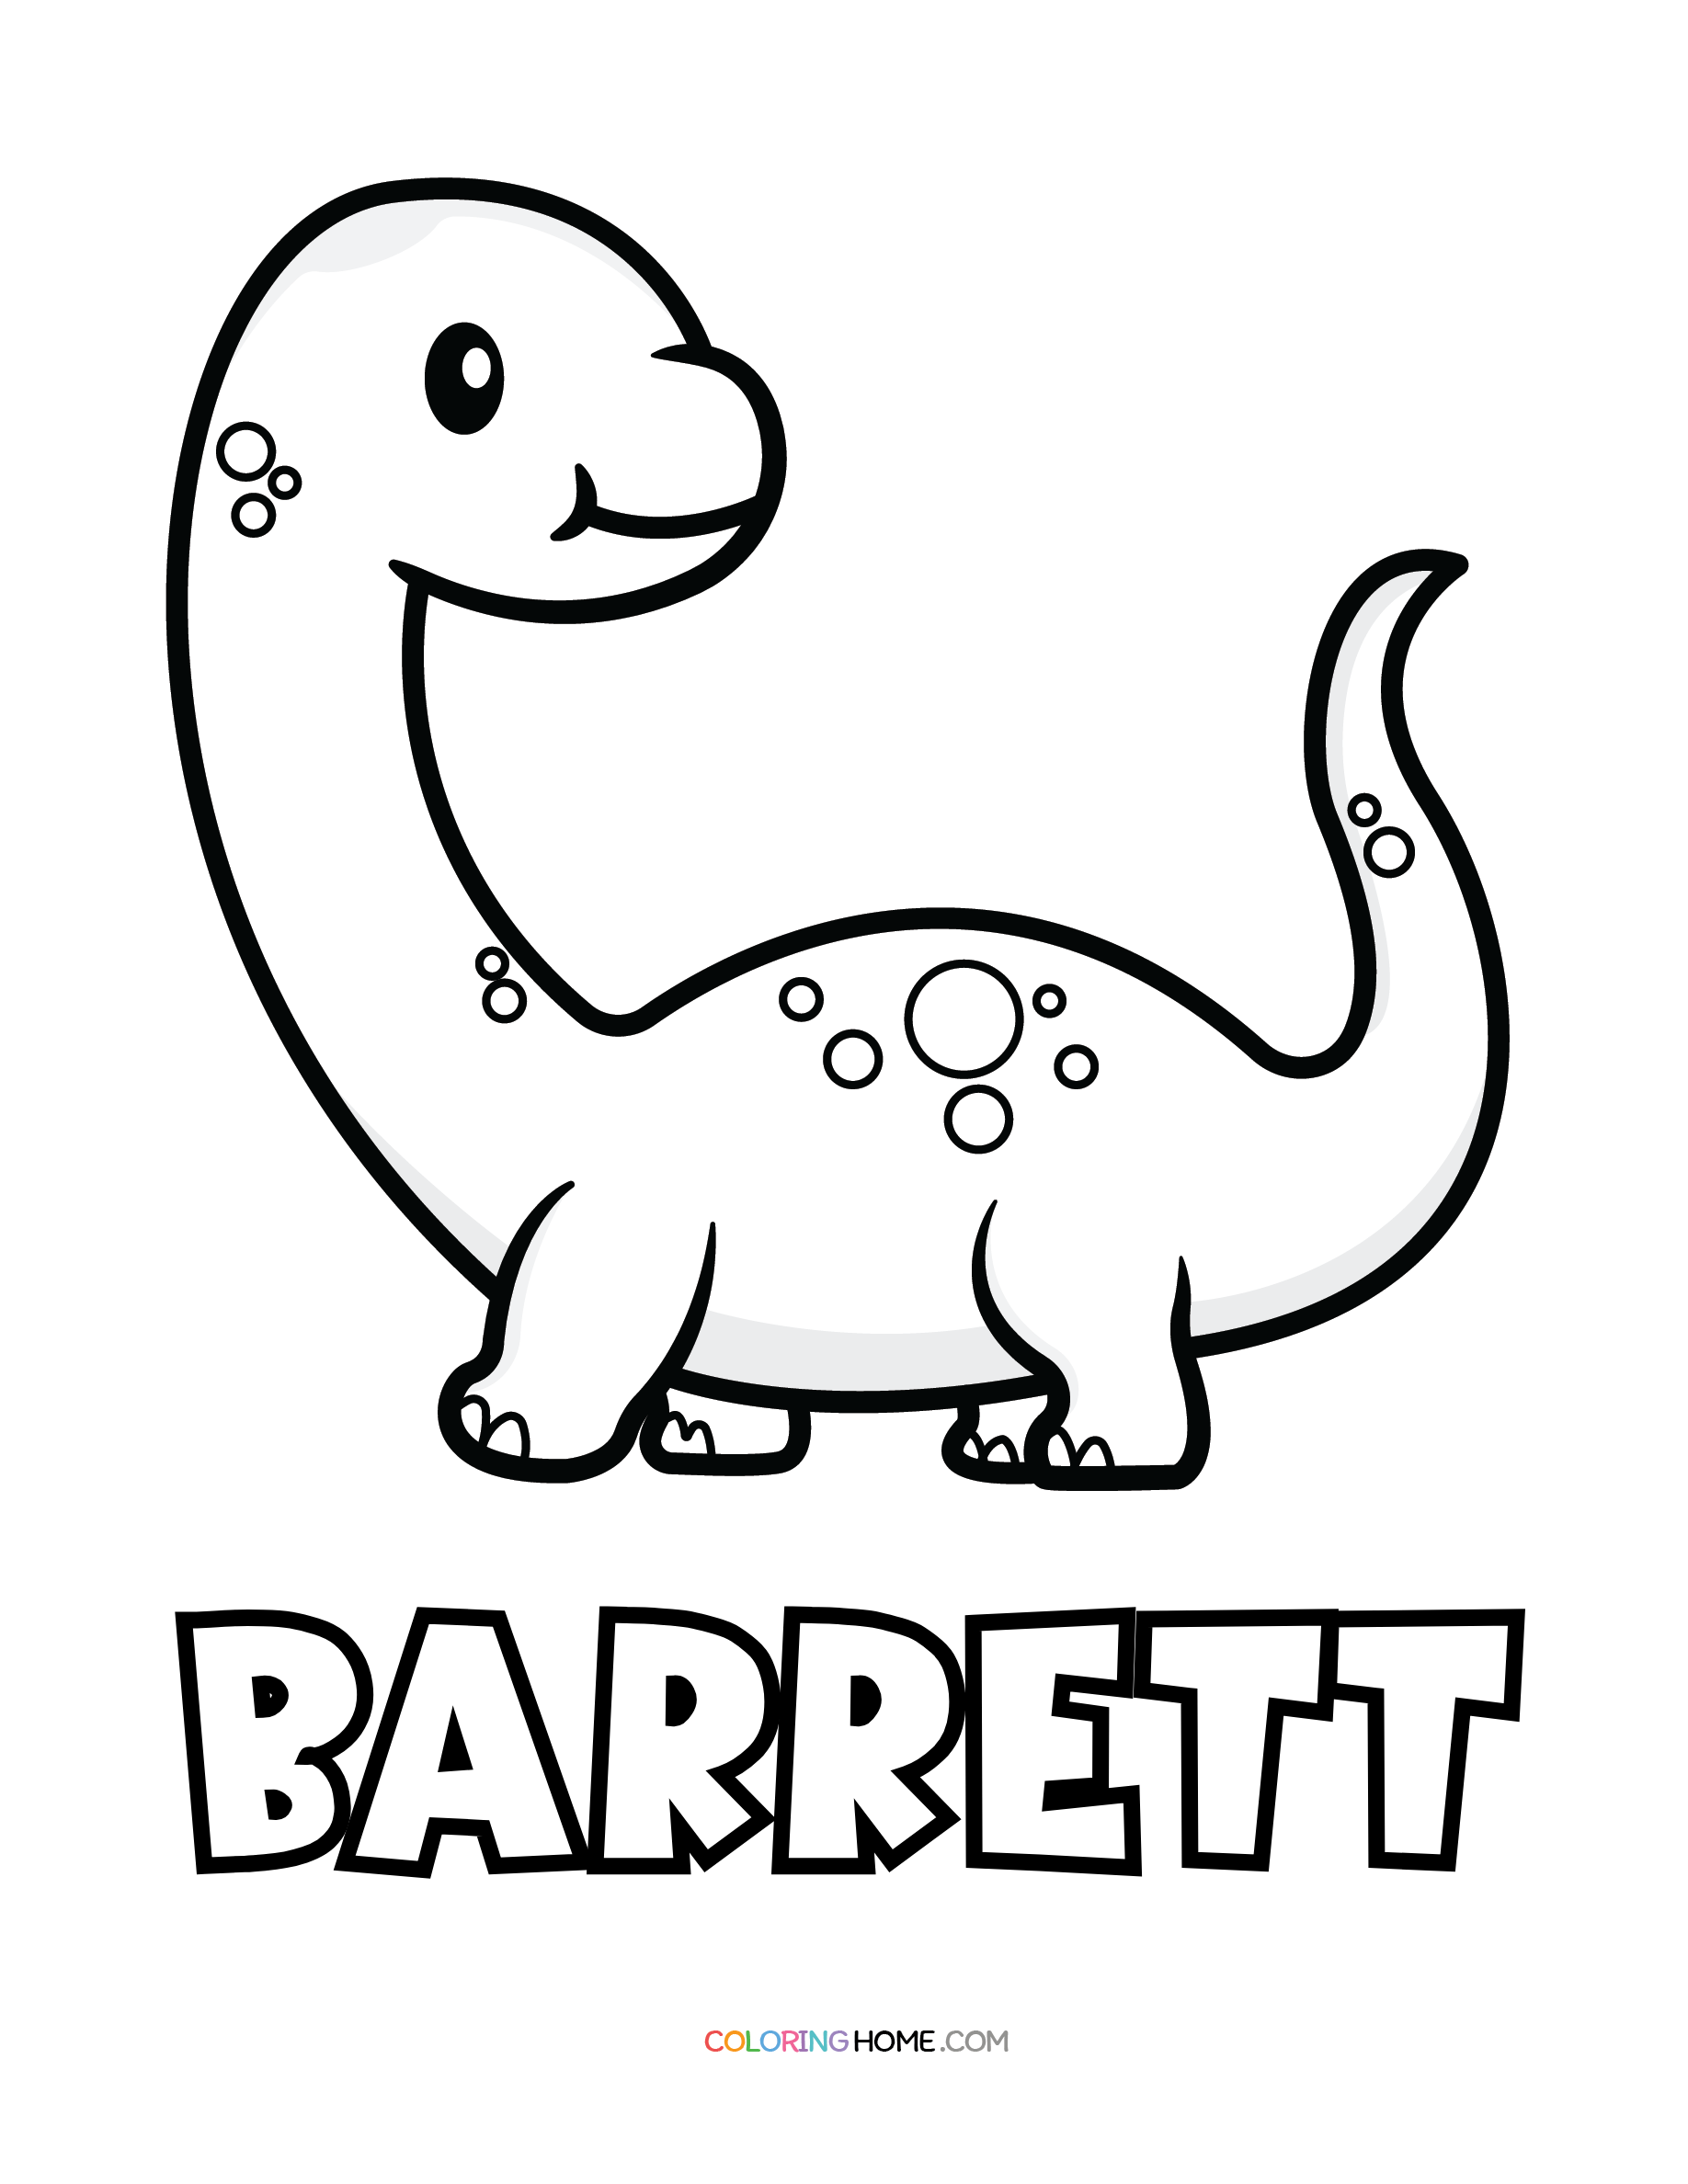 Barrett dinosaur coloring page